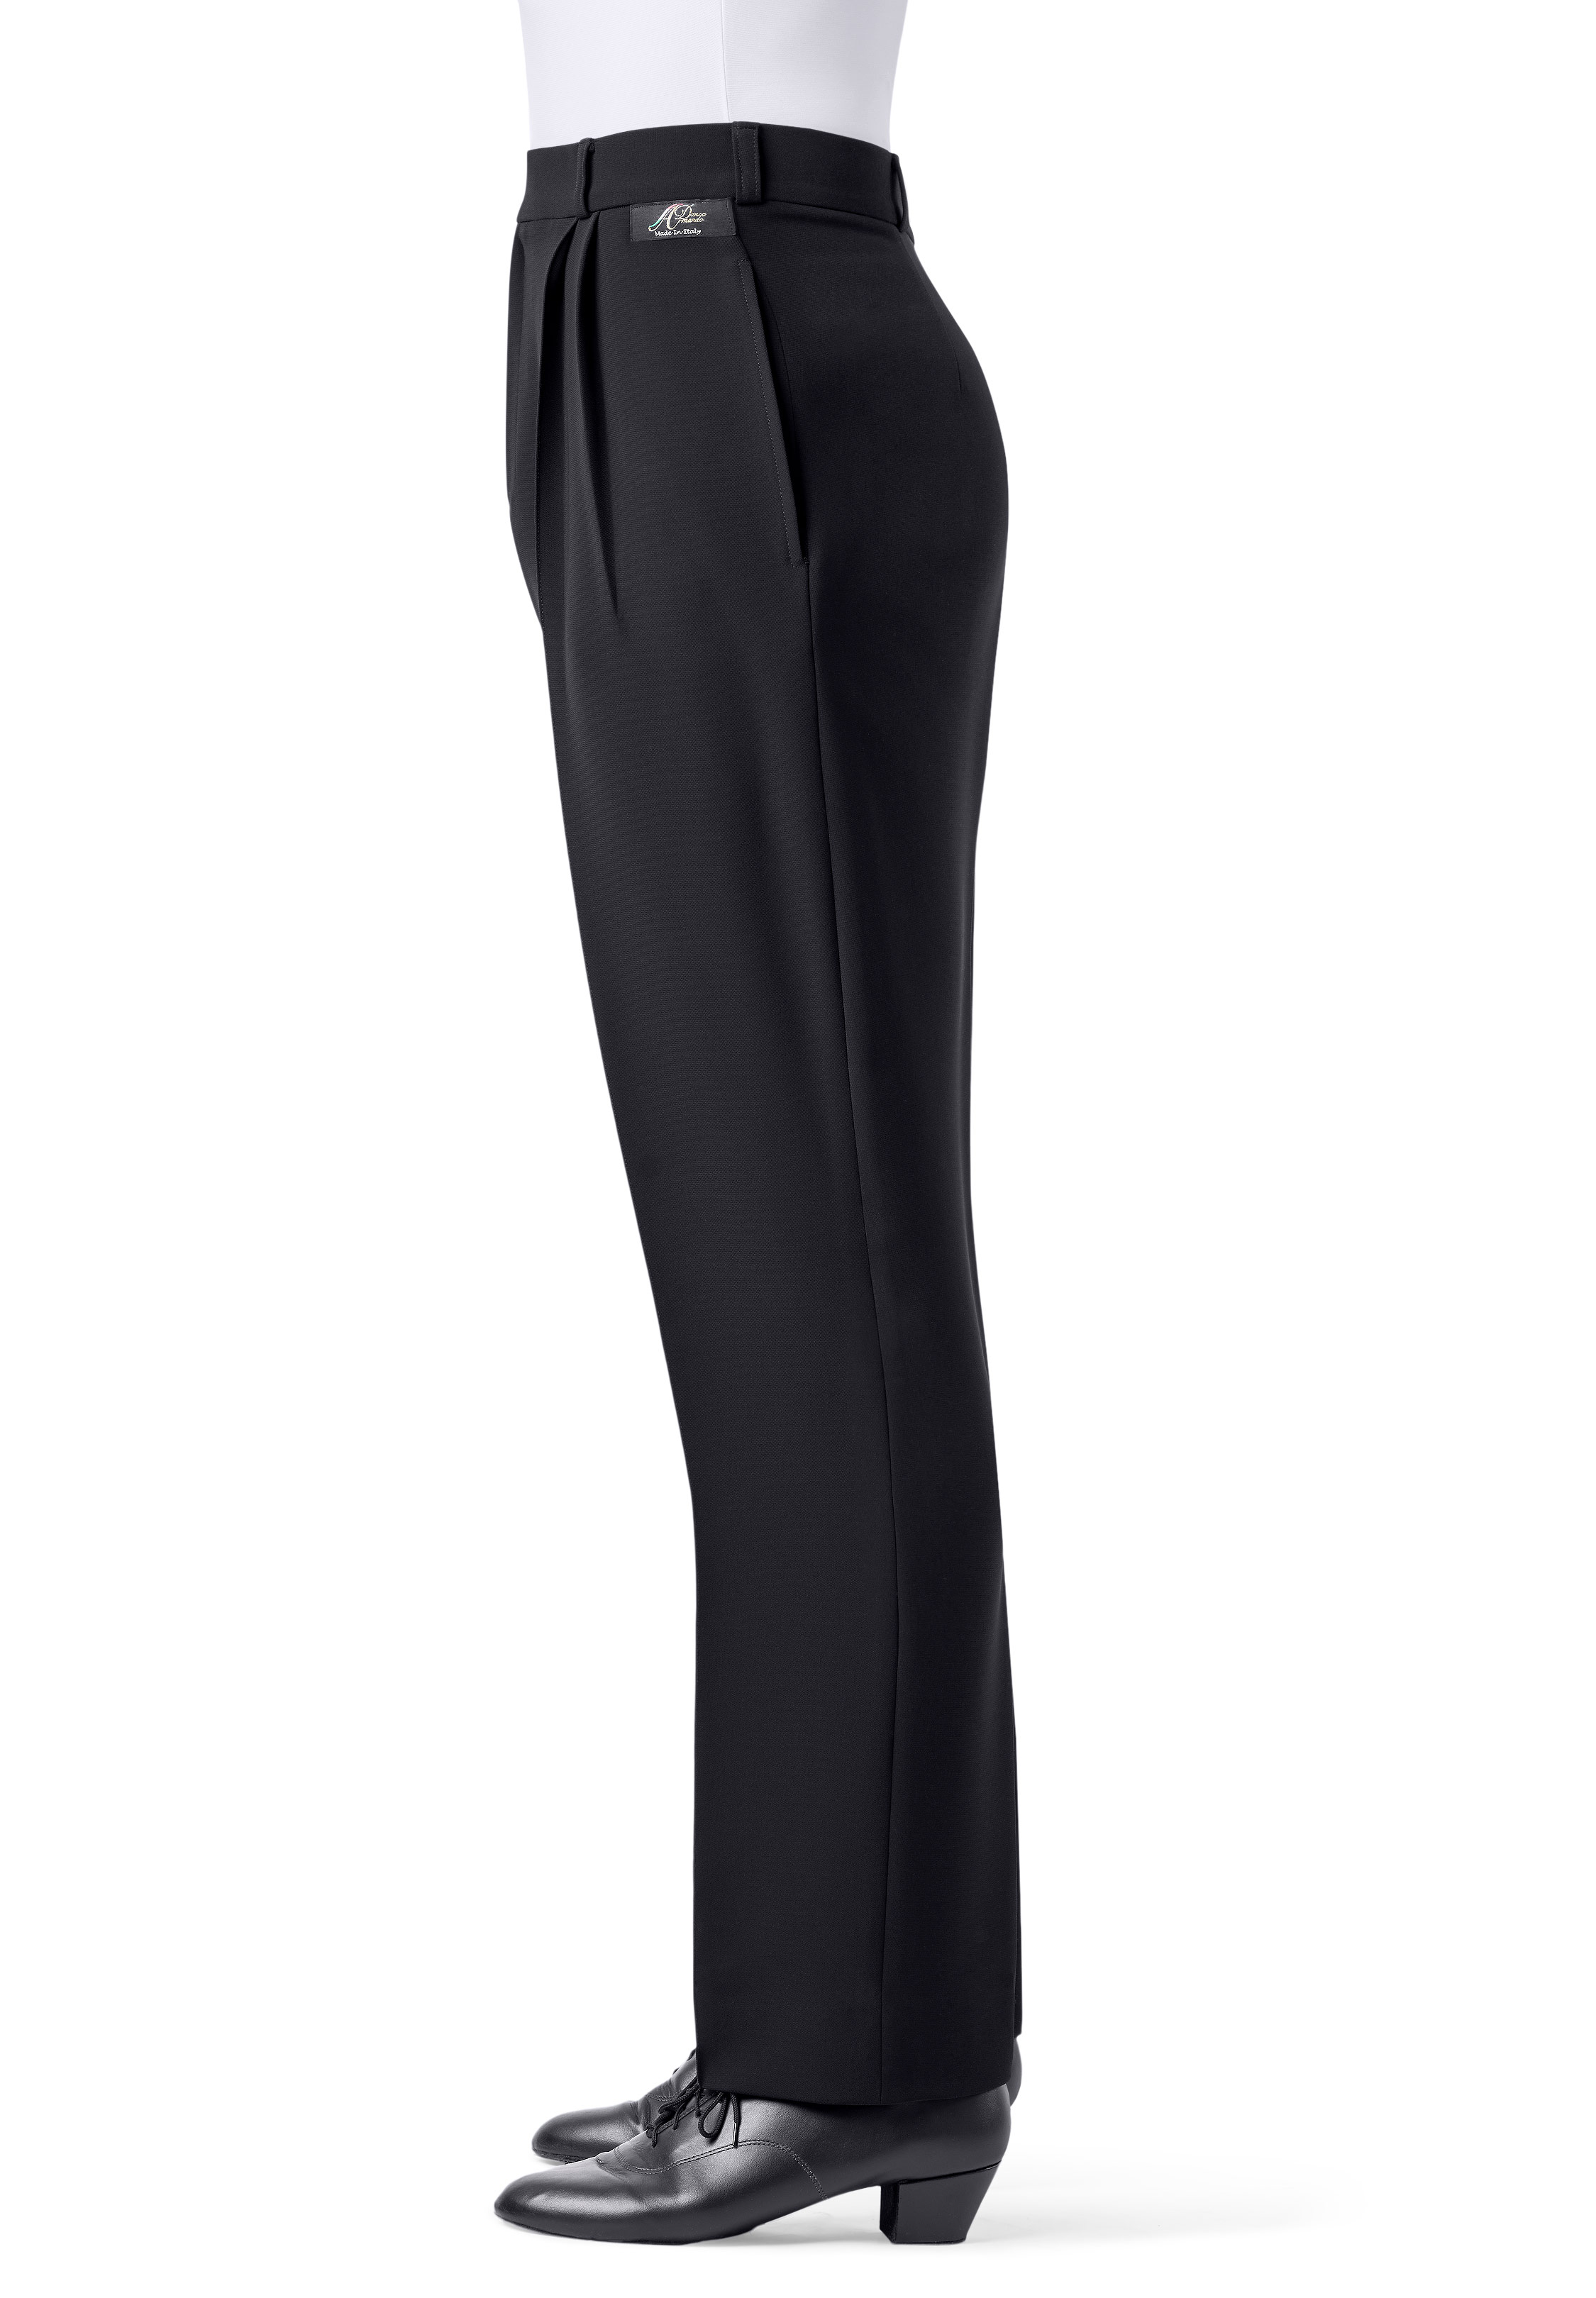 Mens Faux Leather Pants Black Pu Leggings Stretch Wet Look Trousers Slim  Fashion | eBay